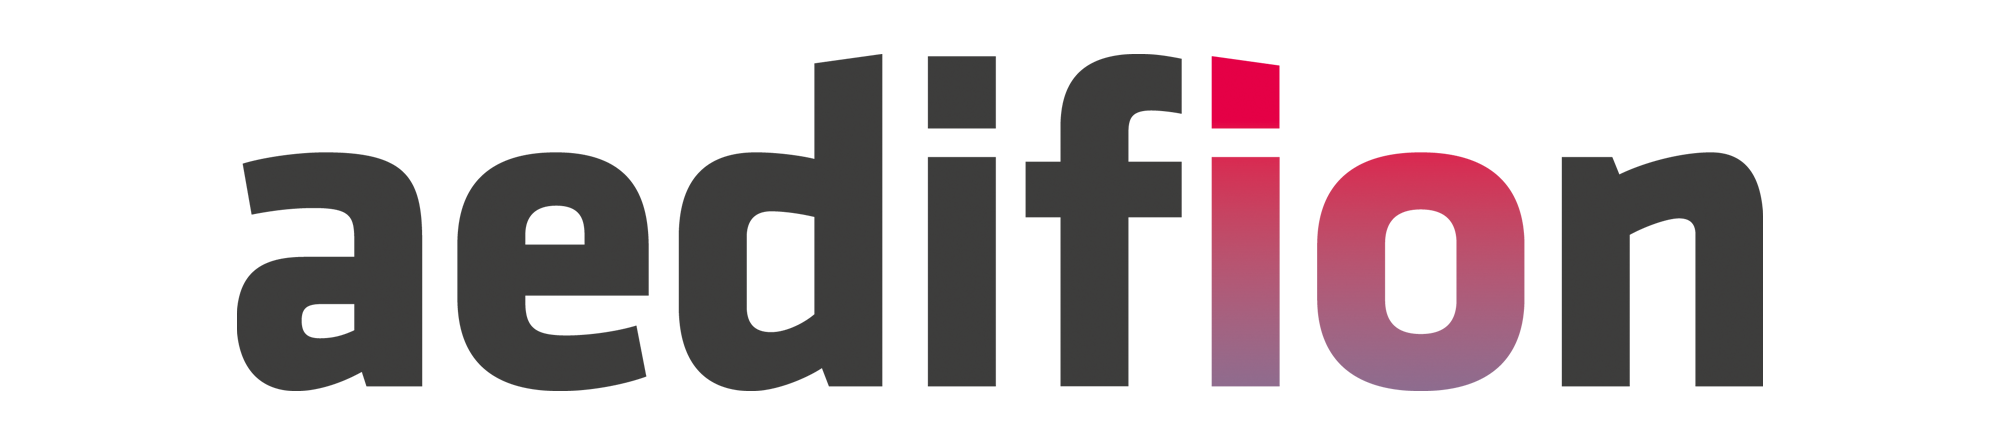 aedifion Logo.